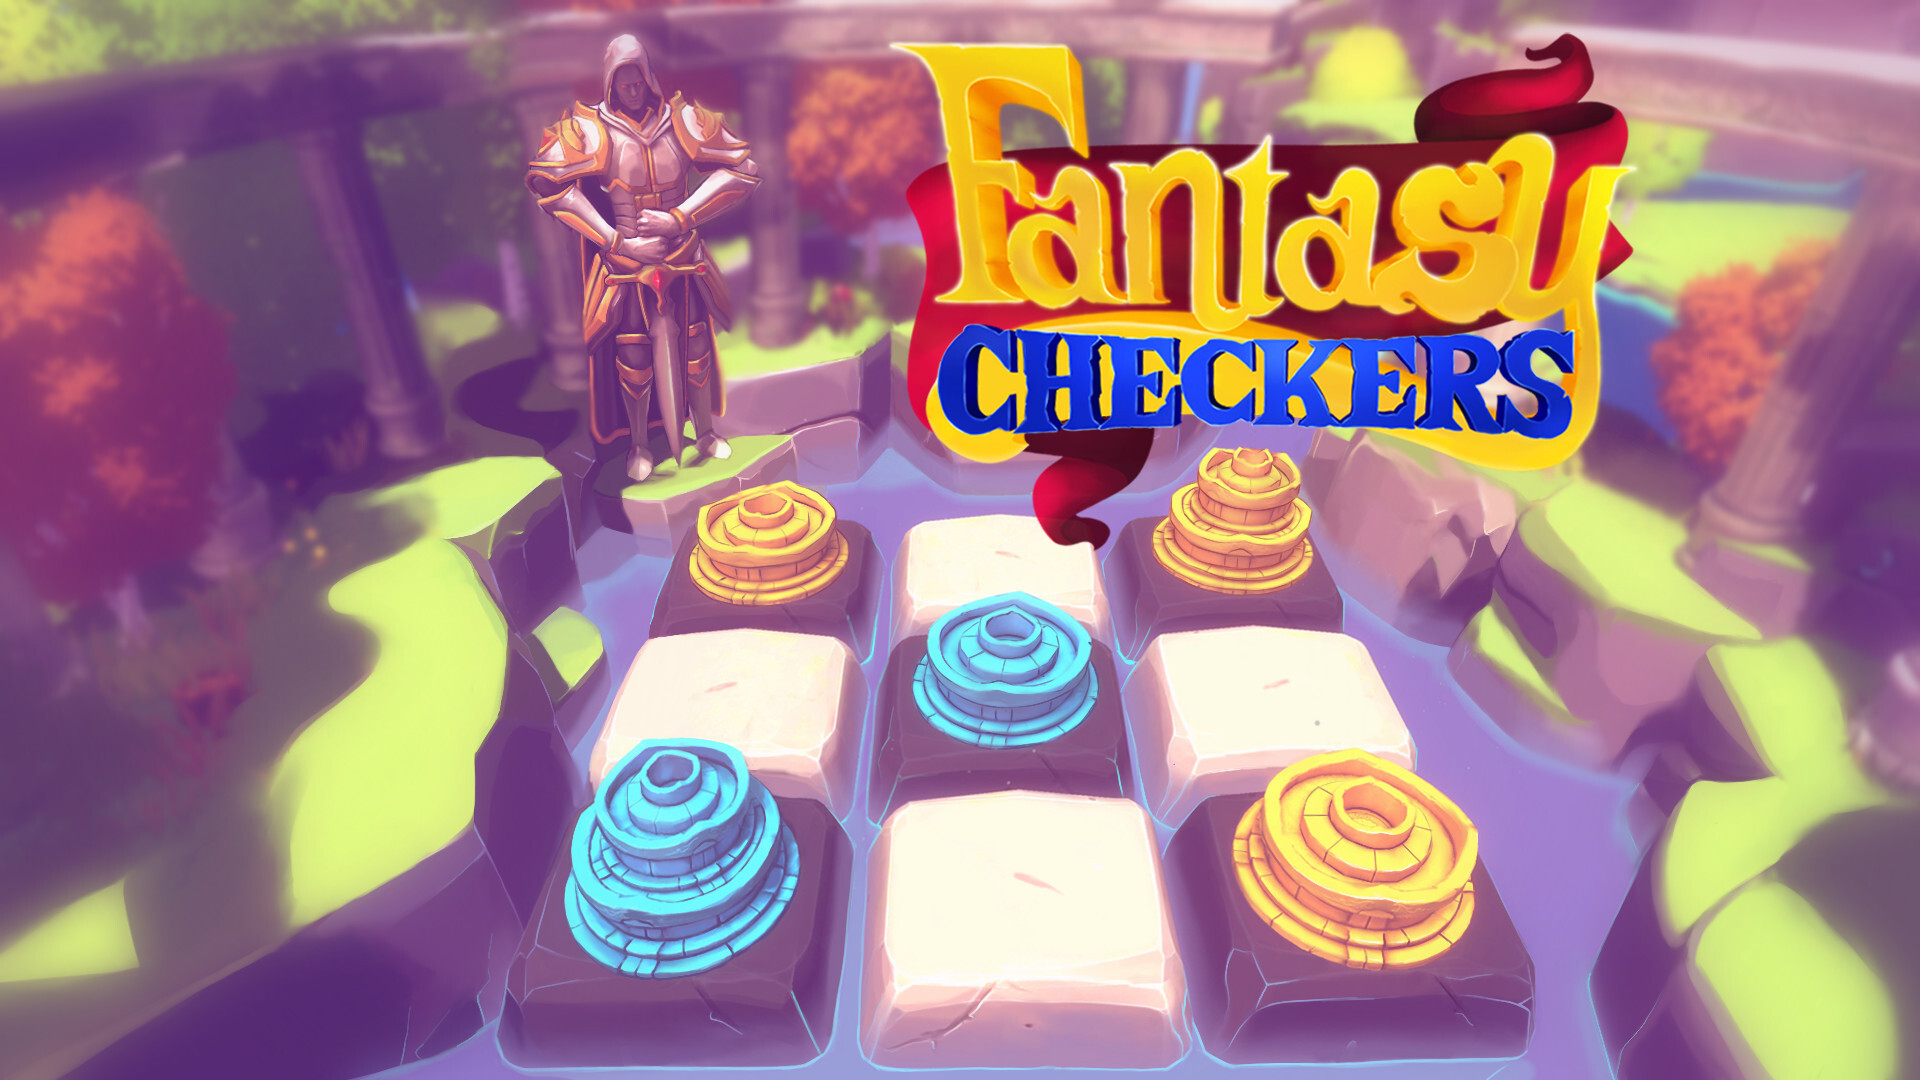 Fantasy Checkers